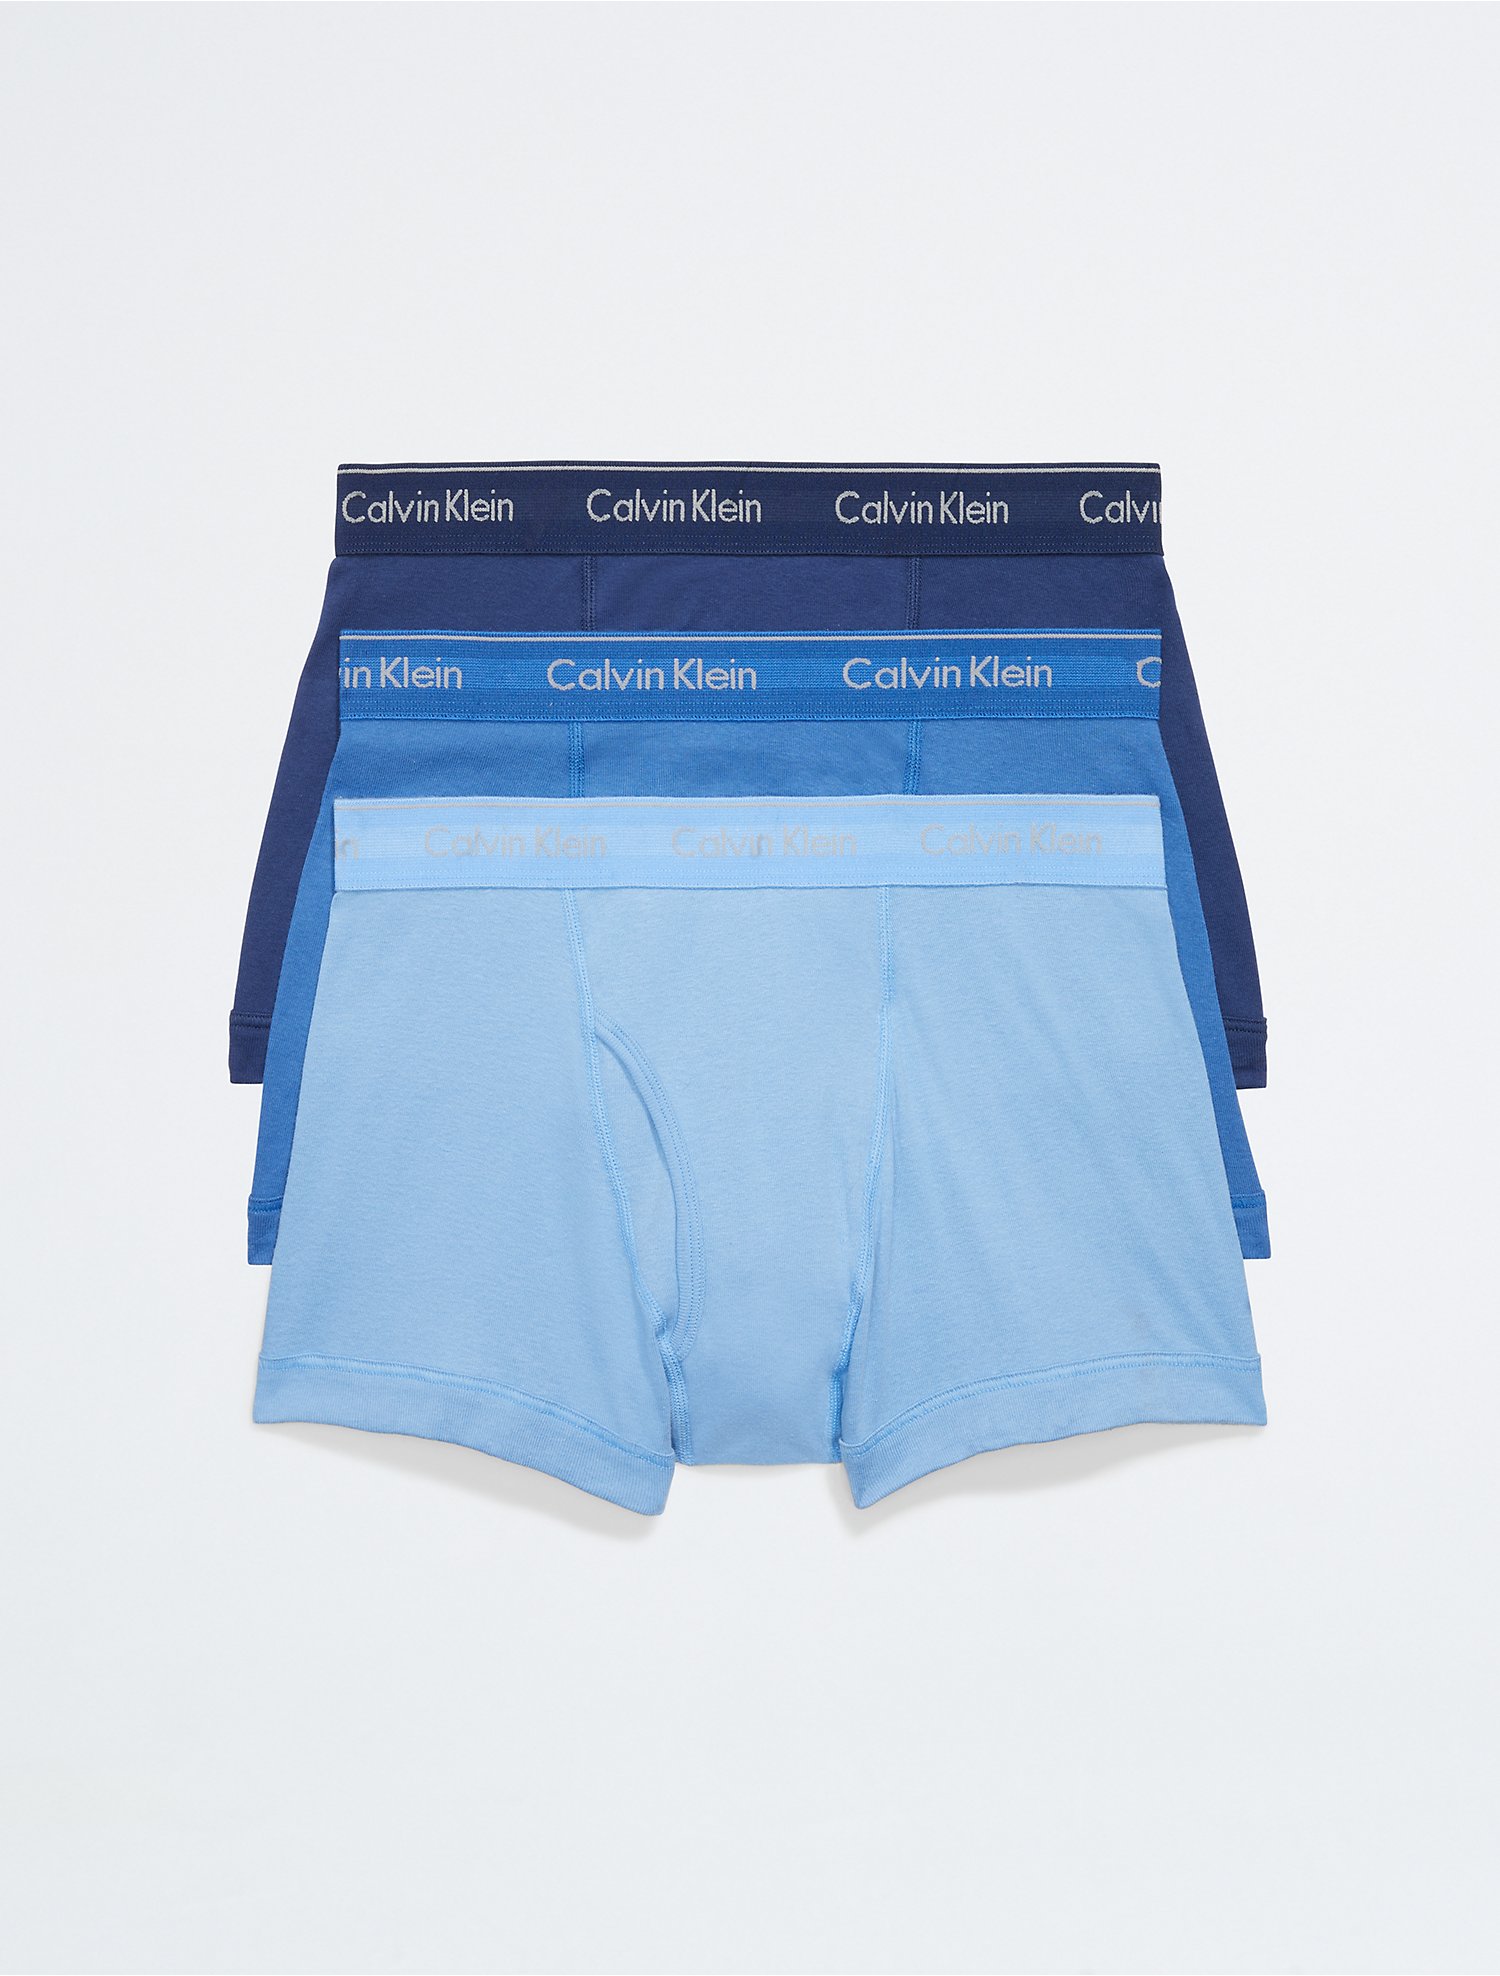 Cotton Classic Fit 3-Pack Trunk | Calvin Klein